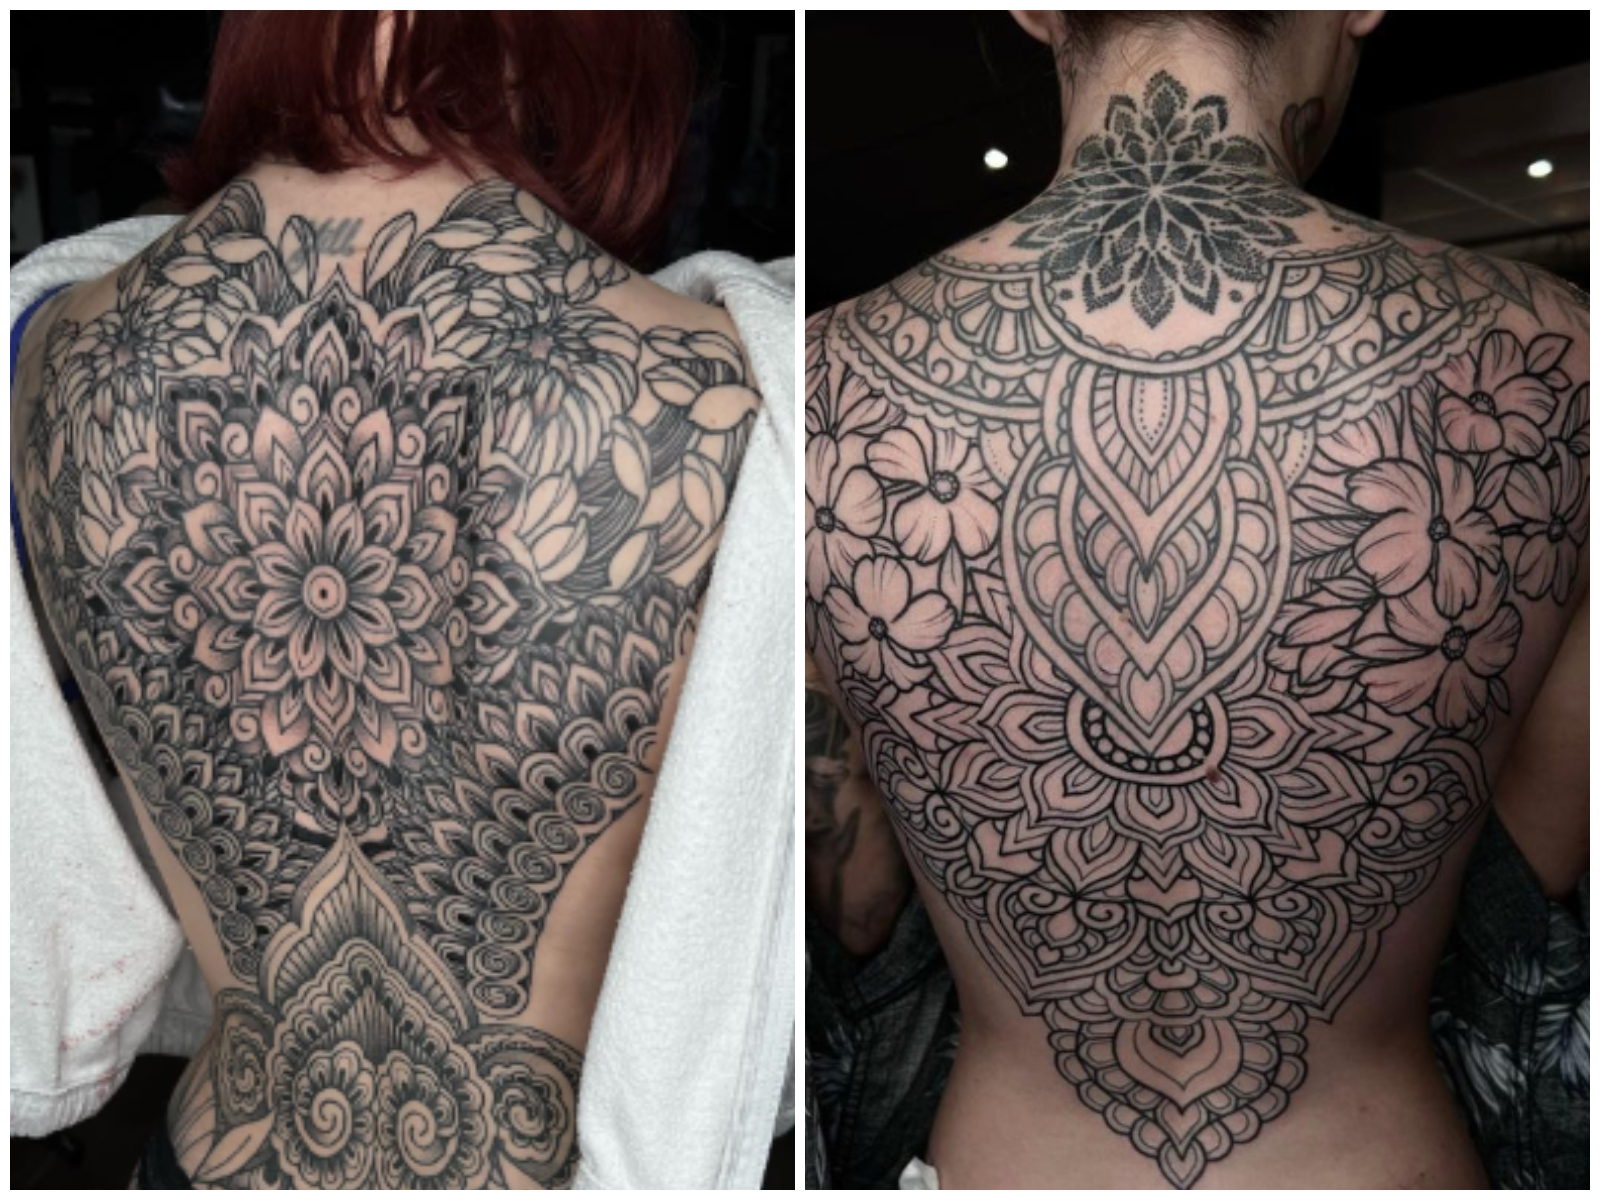 Huge mandala tattoo on the back.